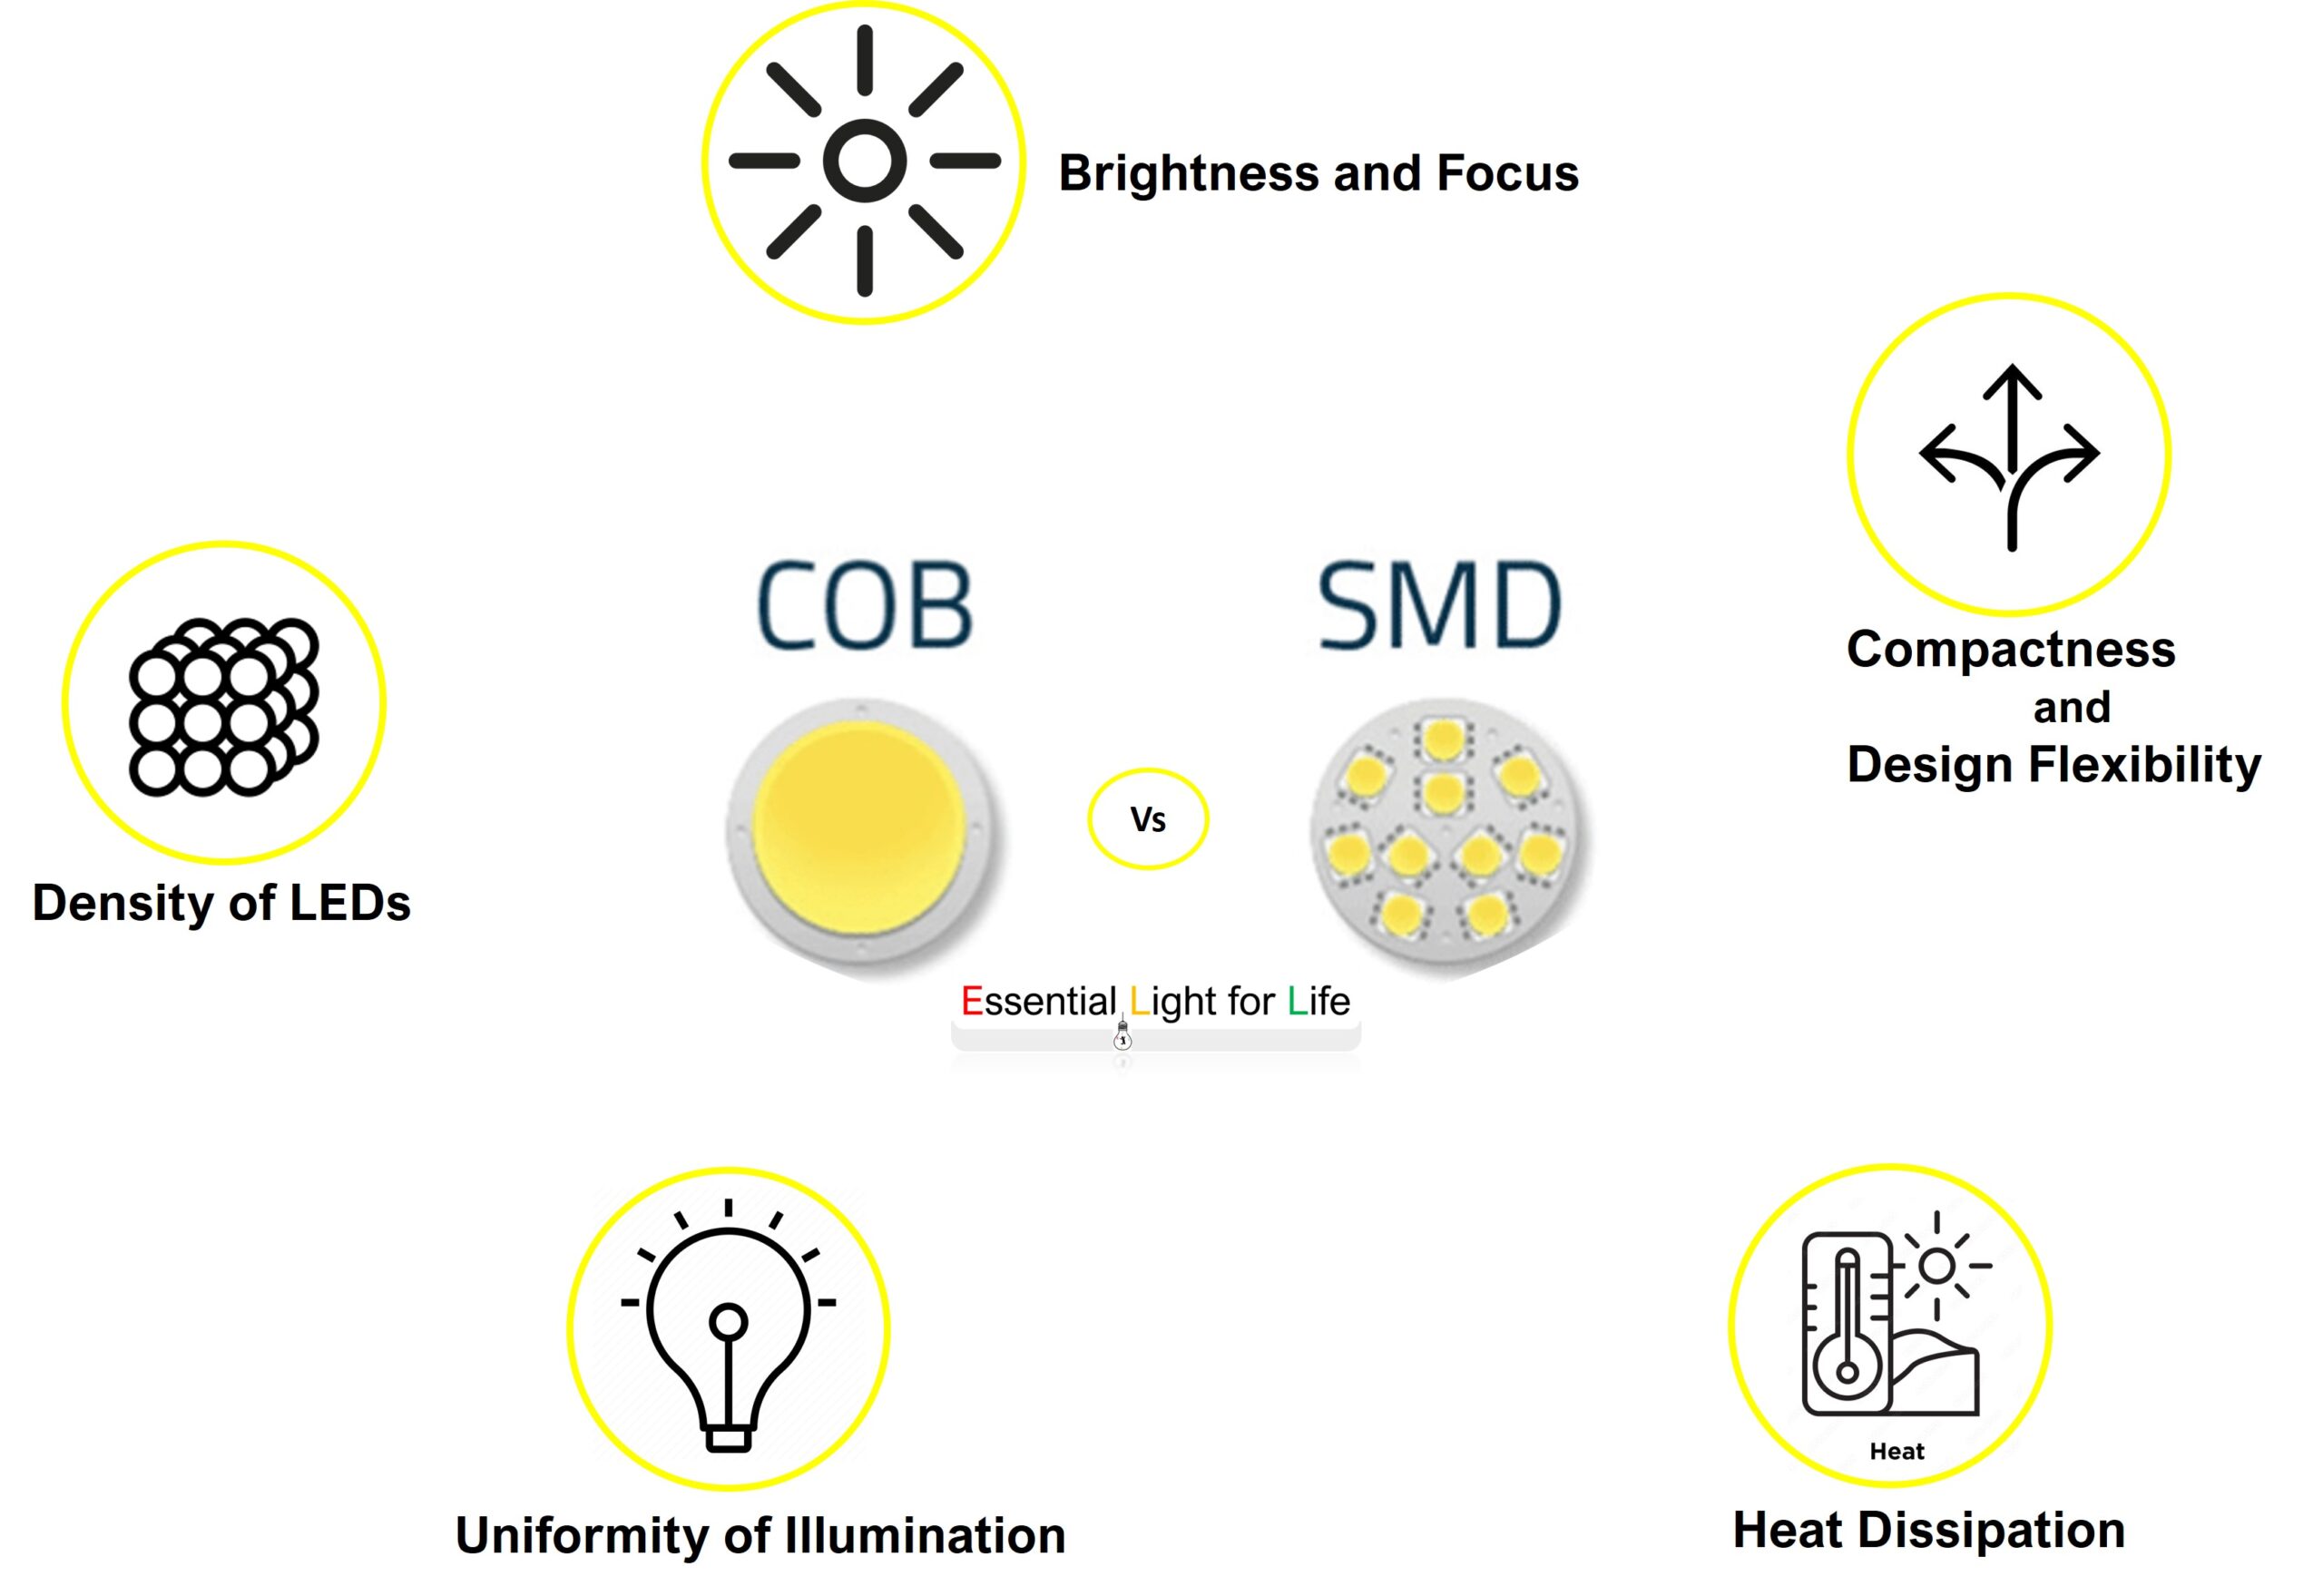 Comparing COB LEDs to SMD LEDs